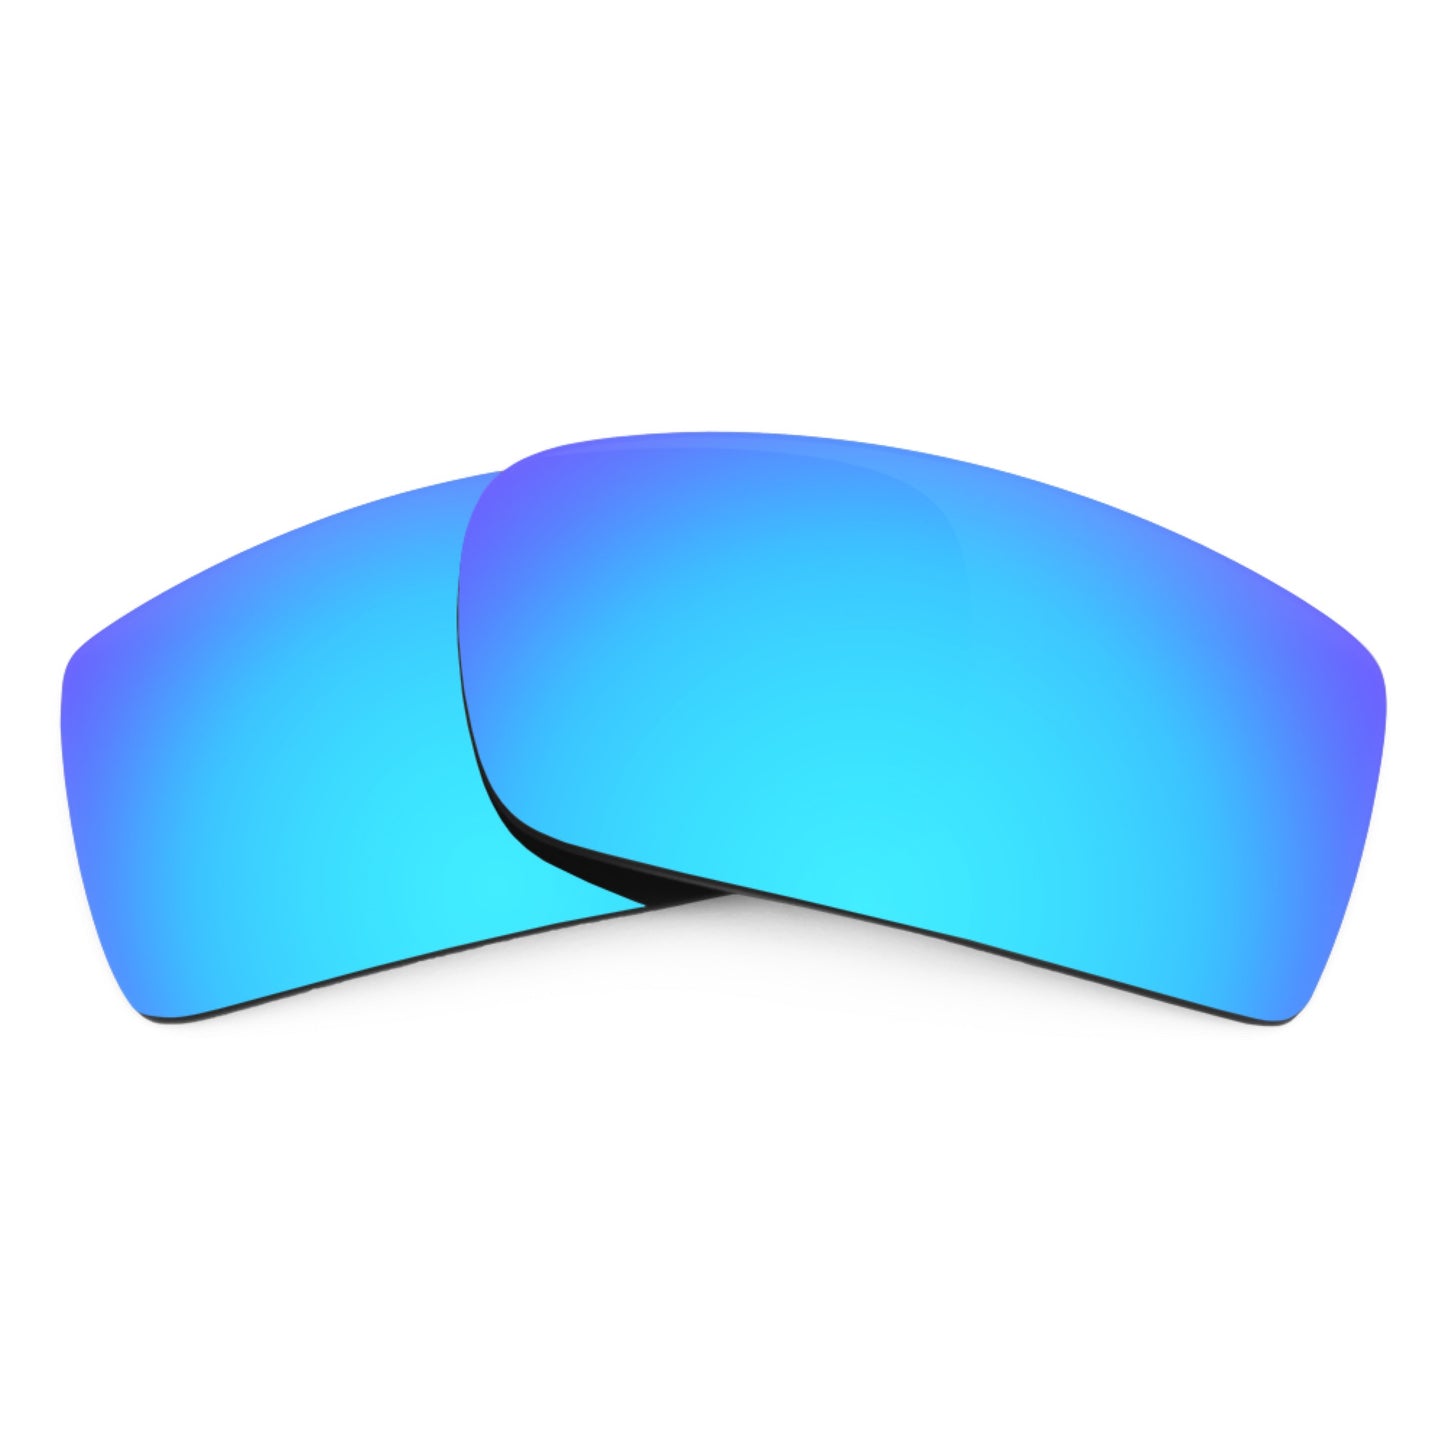 Revant replacement lenses for Prada VPR 02O Polarized Ice Blue